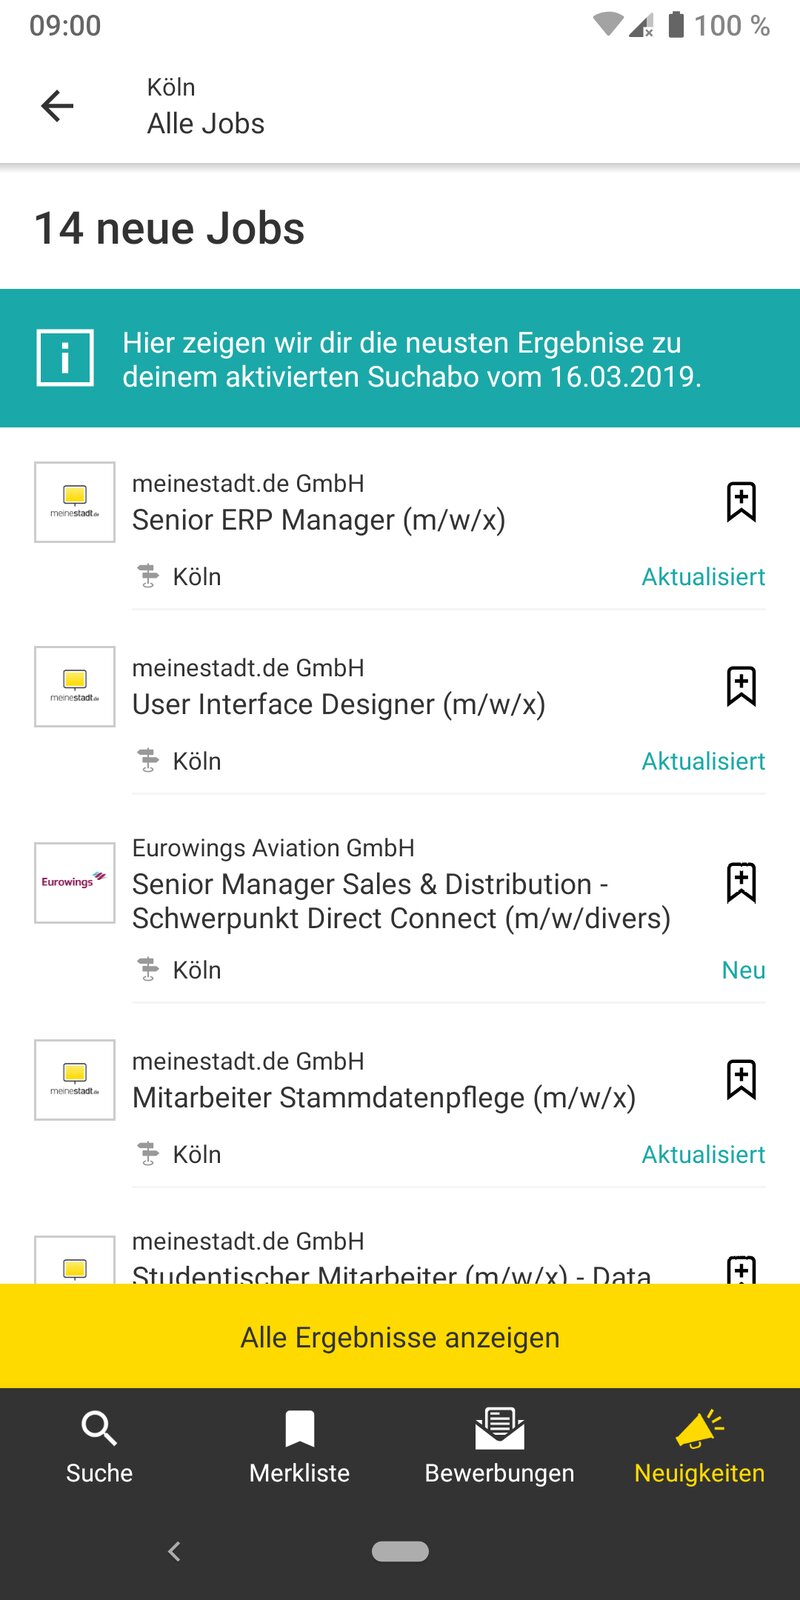 meinestadt.de Jobbörse-App Mockup